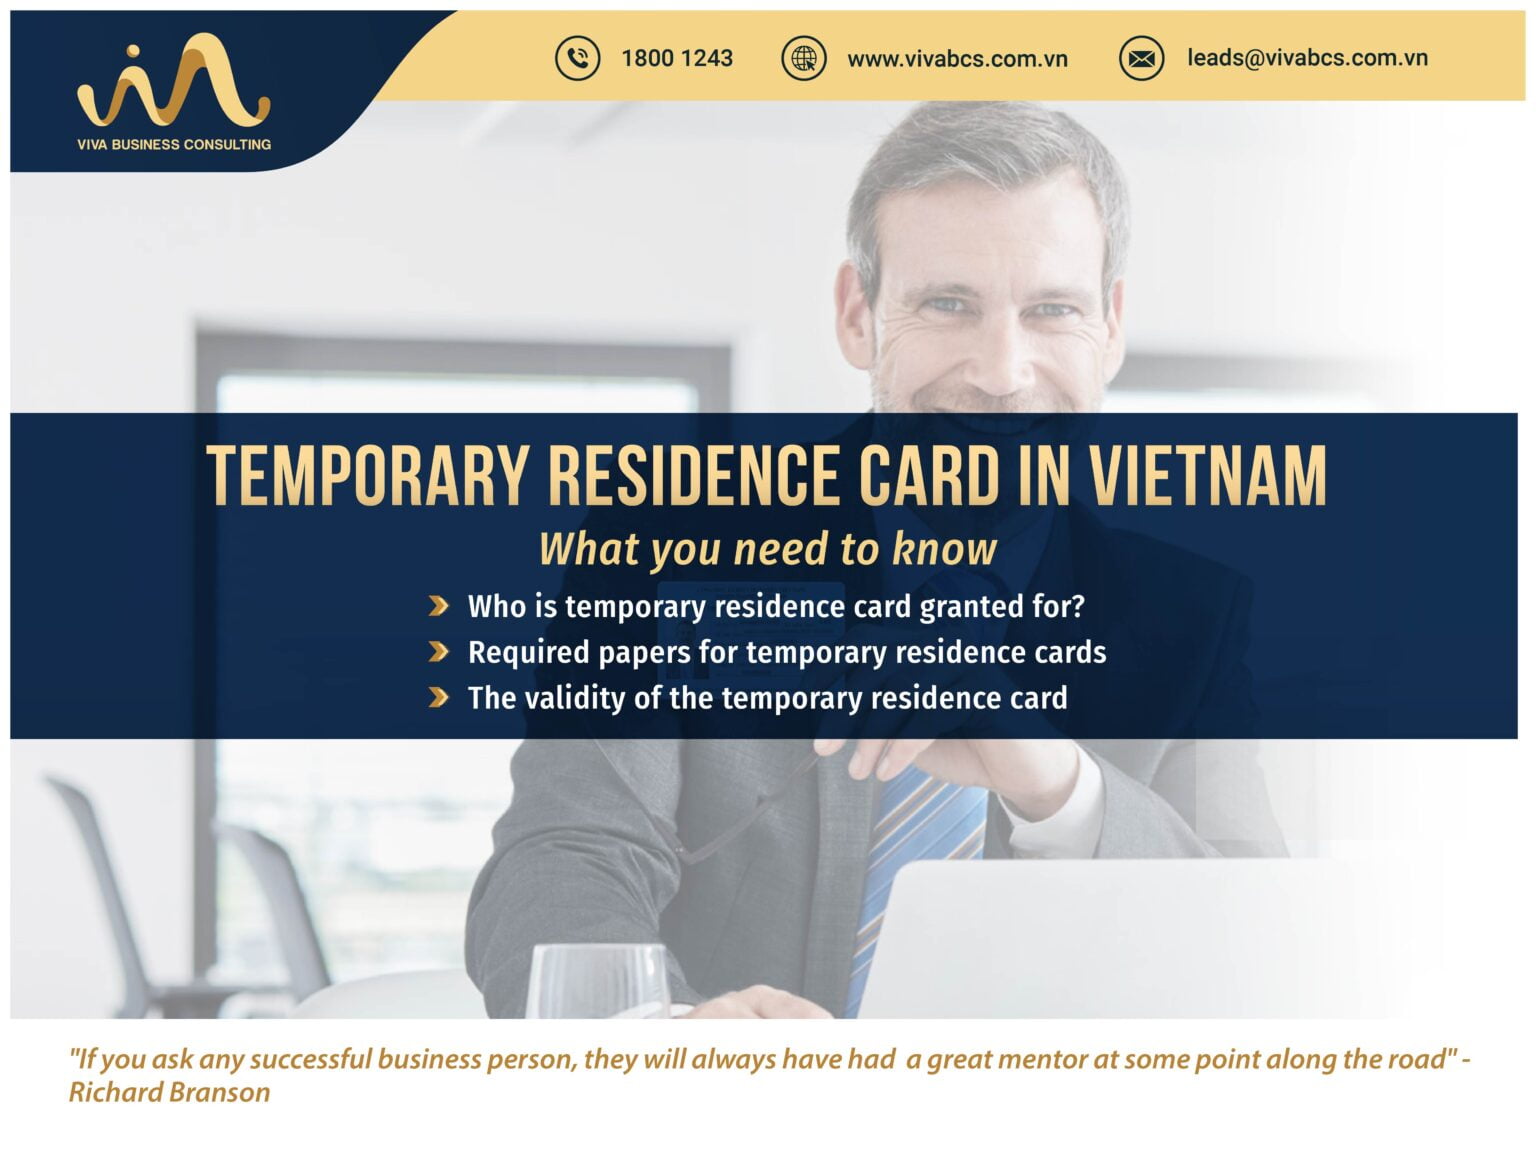 Temporary residence card in Vietnam | VIVA BCS